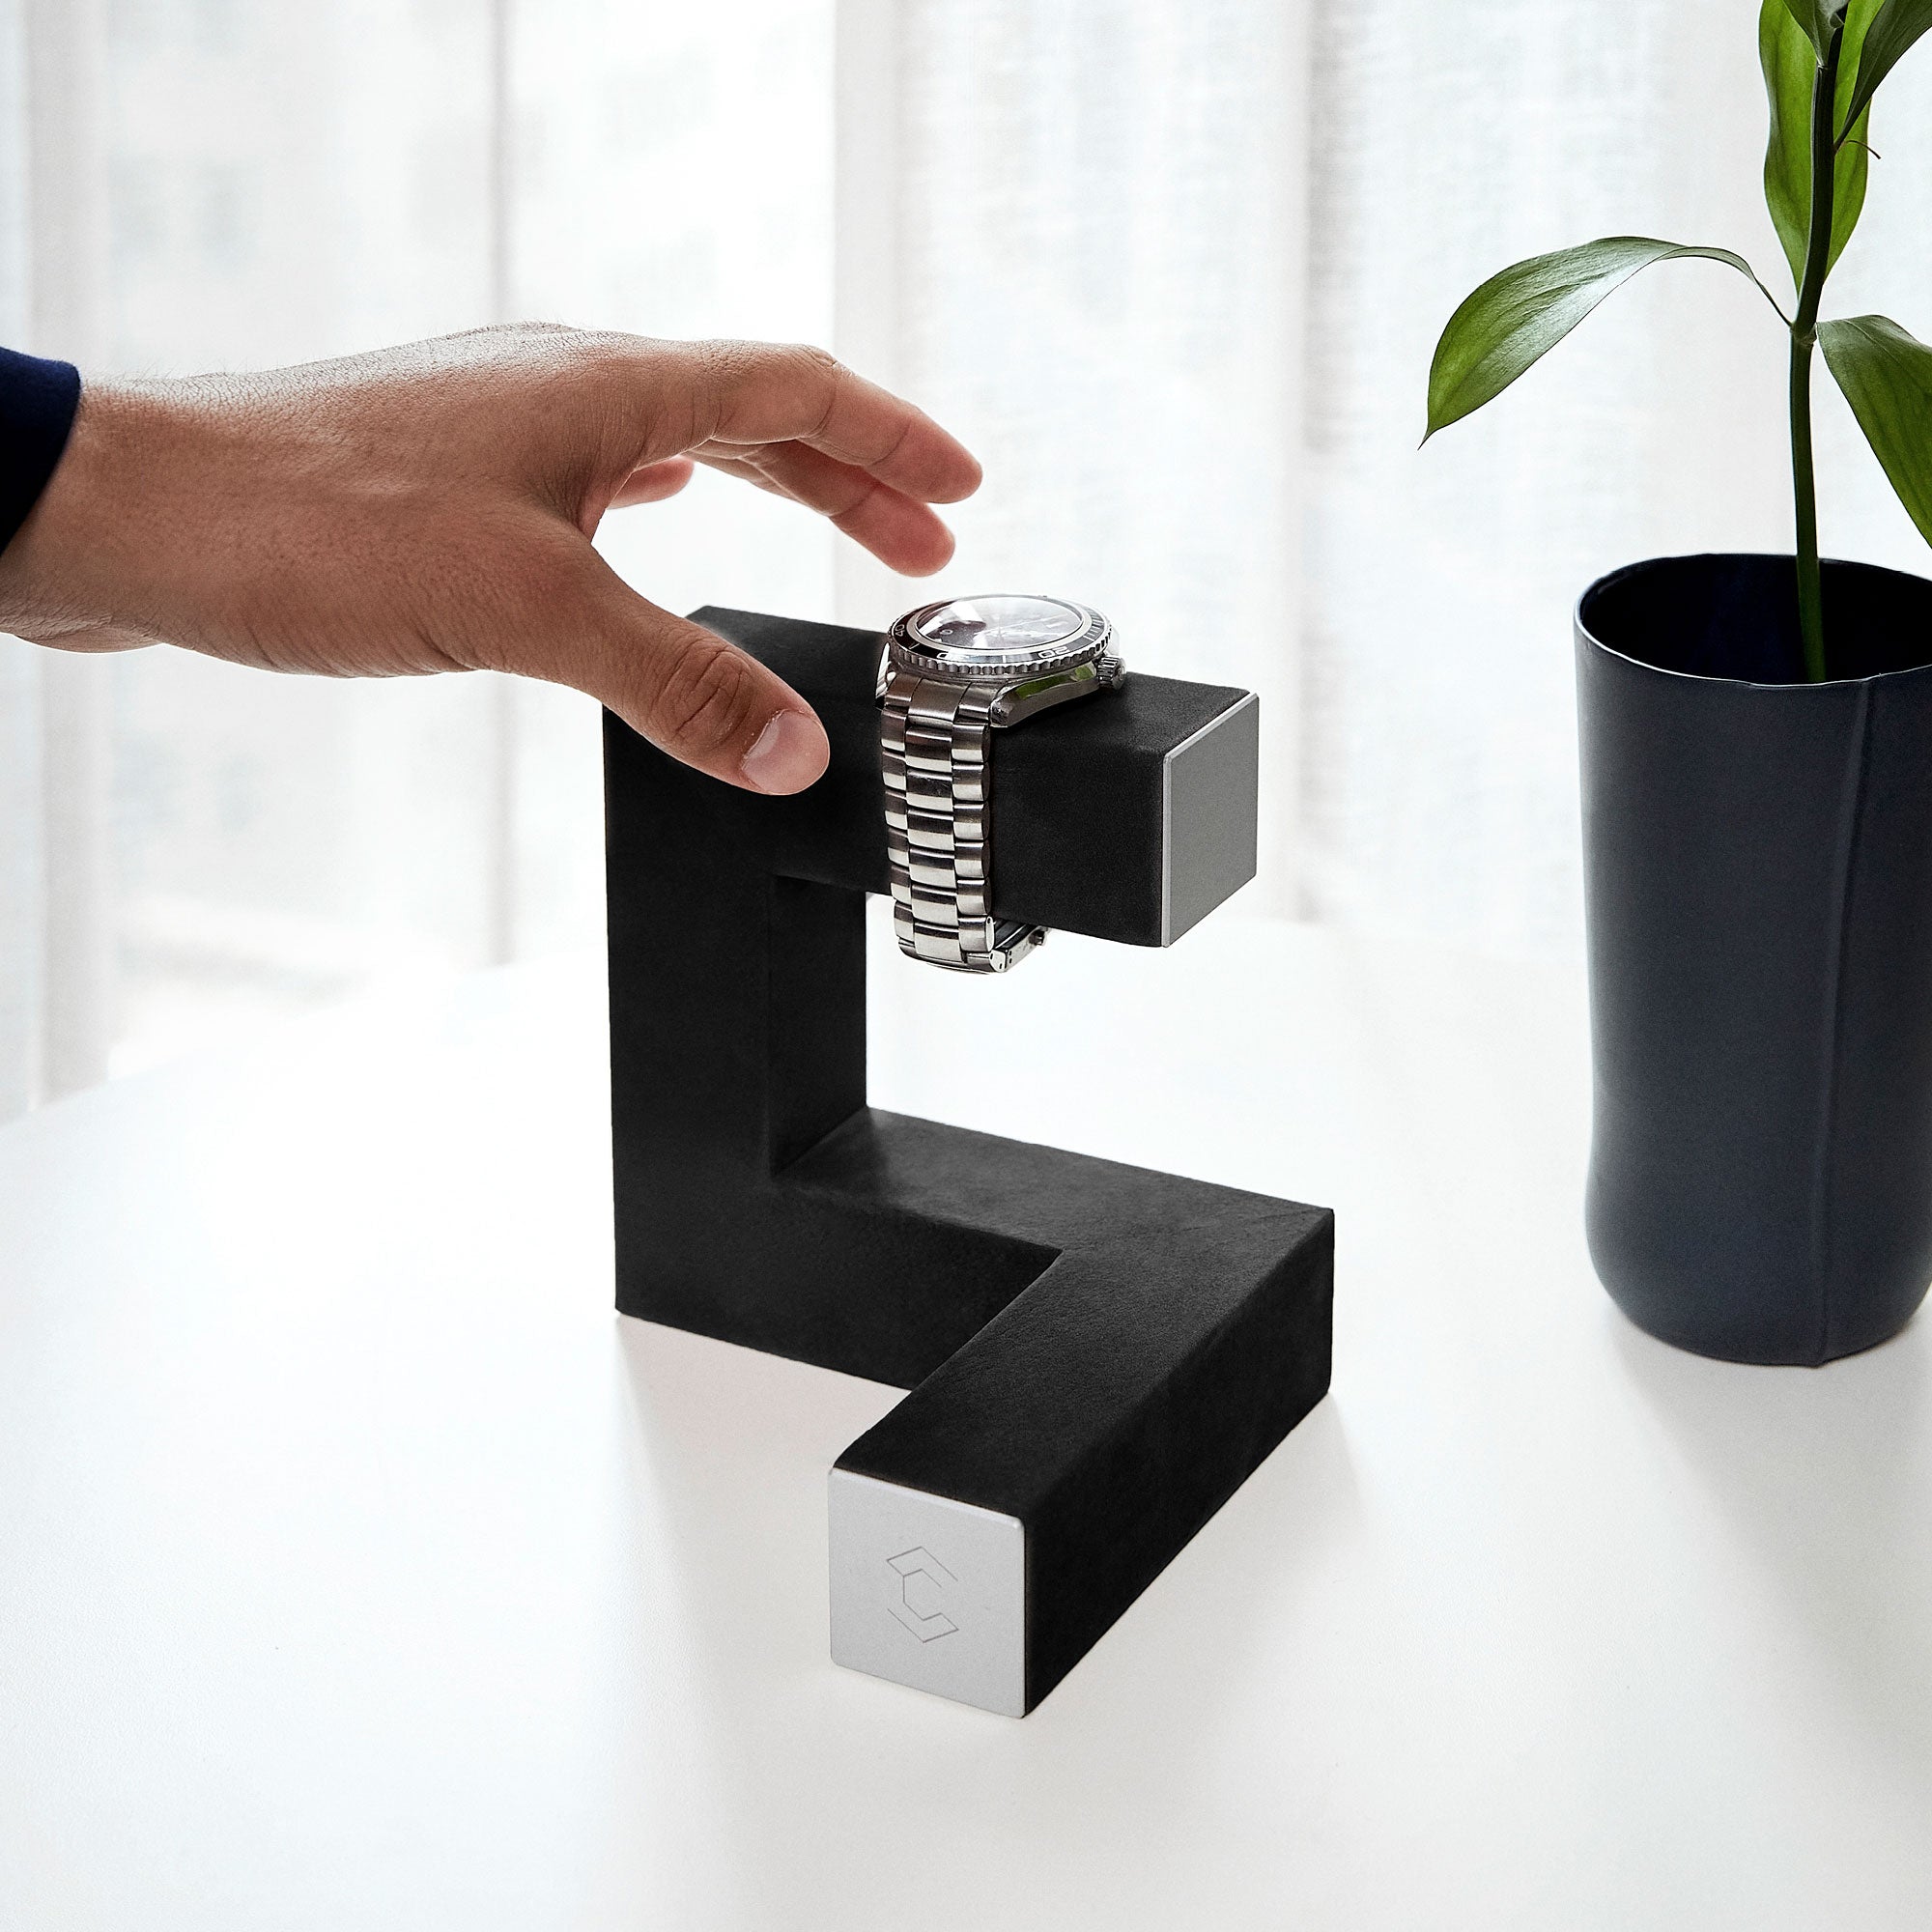 Lifestyle shot of minimalist sculptural Hudson watch stand inspired by modern art holding luxury timepiece